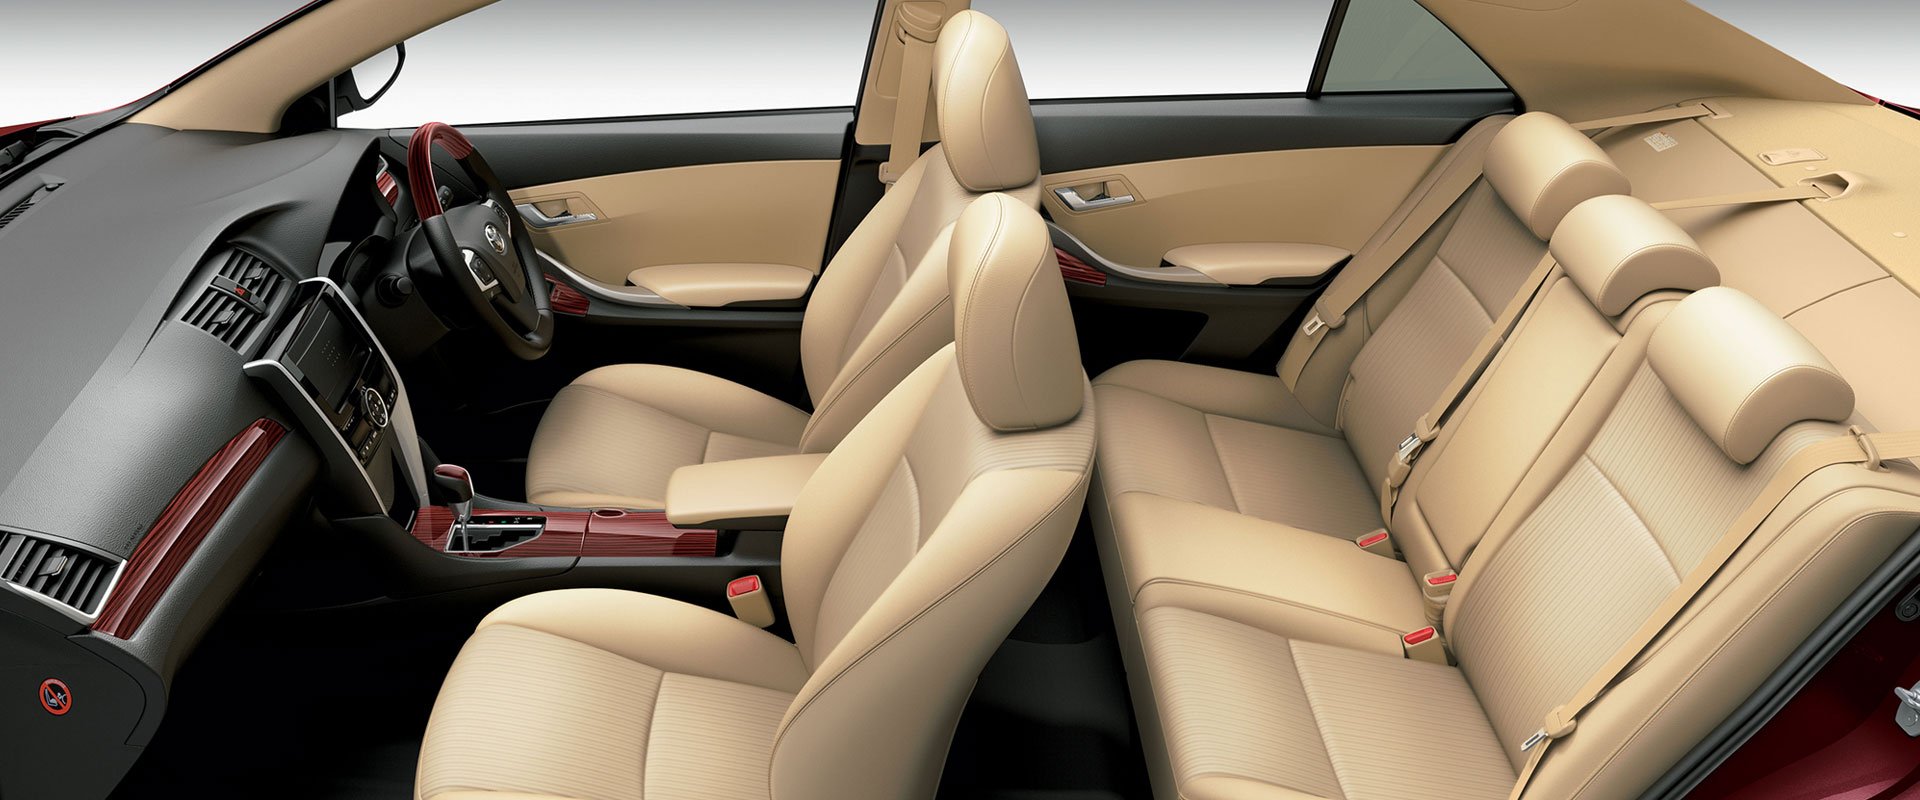 Toyota Premio interior - Seats